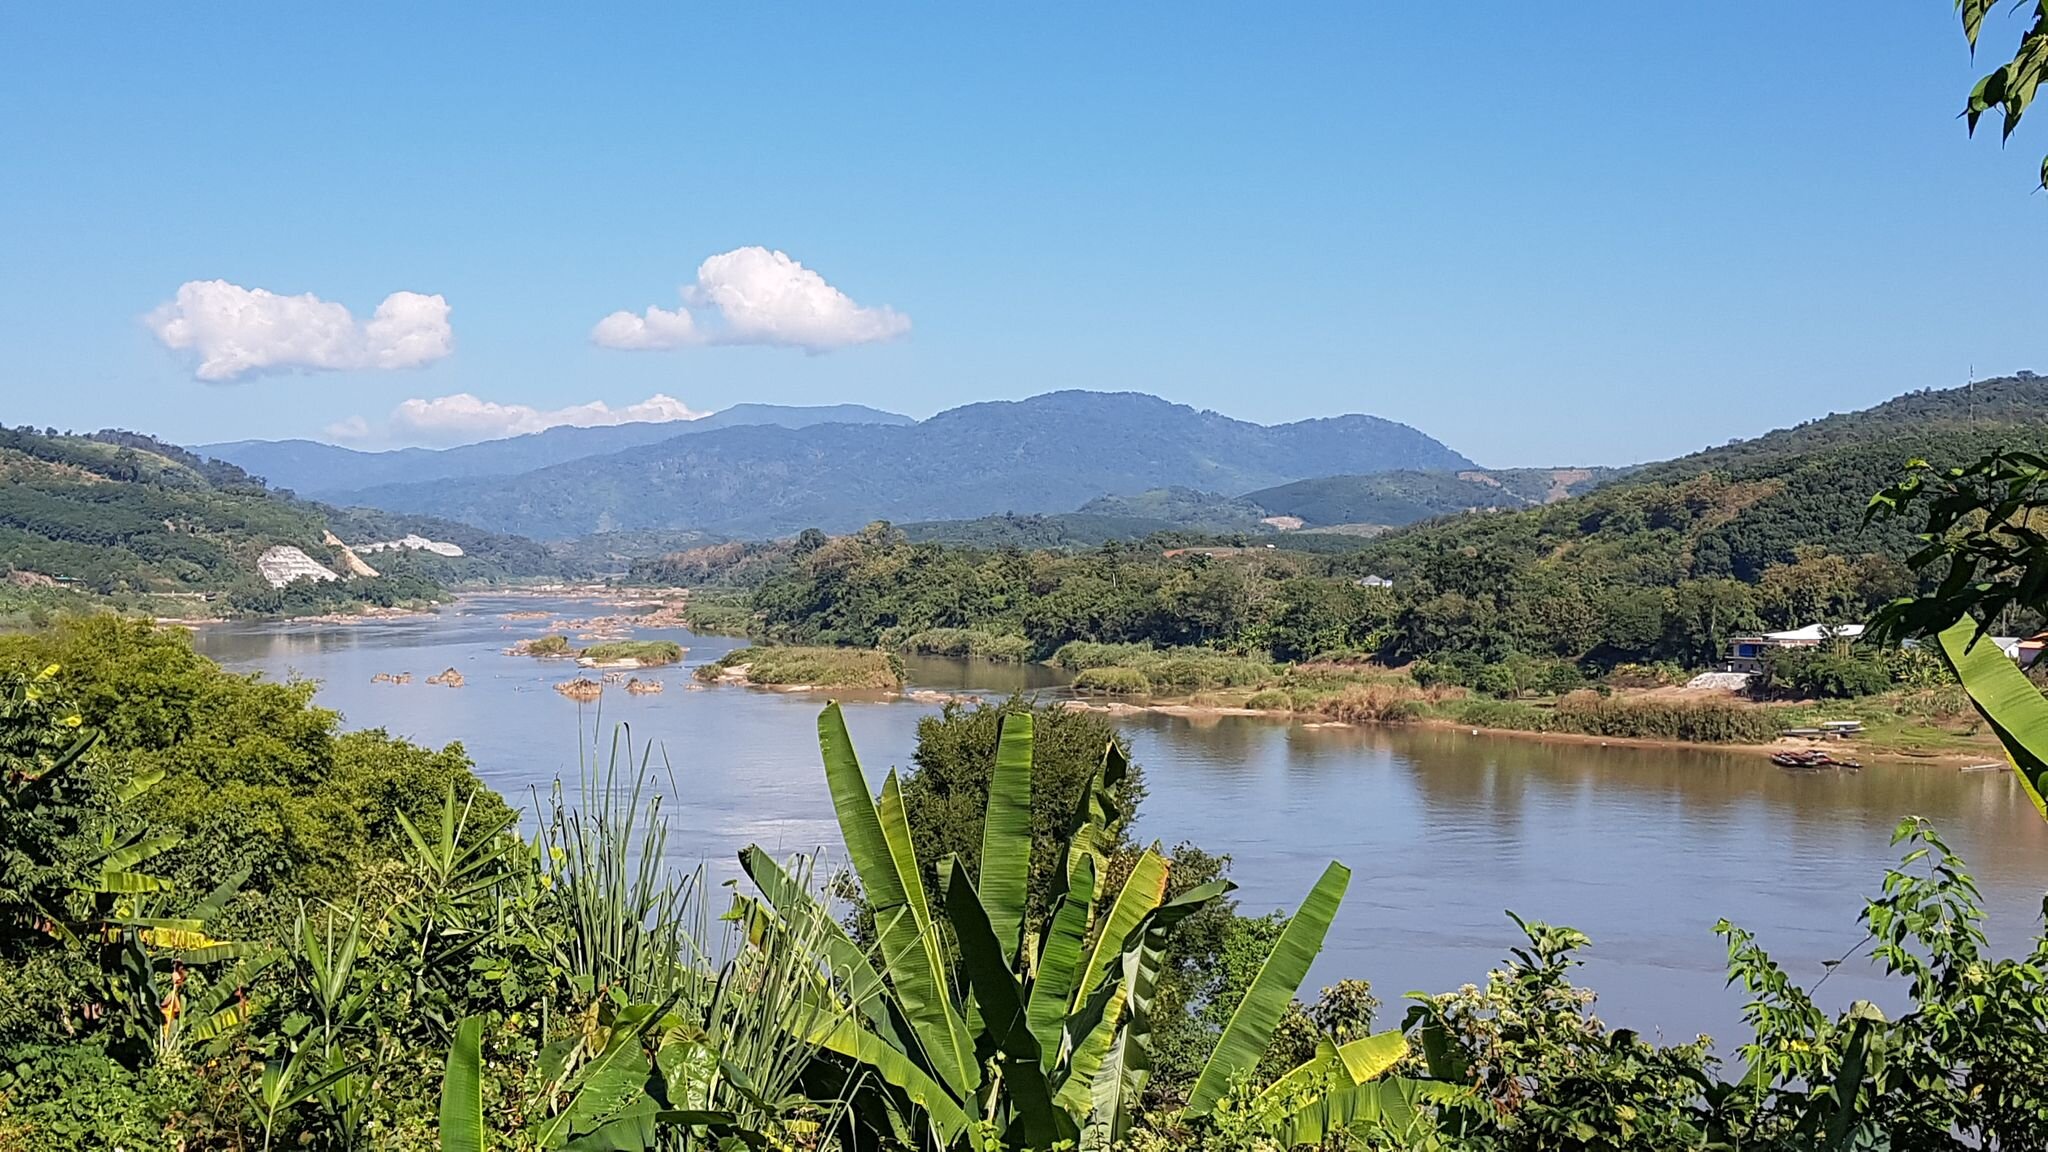   Water Diplomacy in the Mekong Basin  